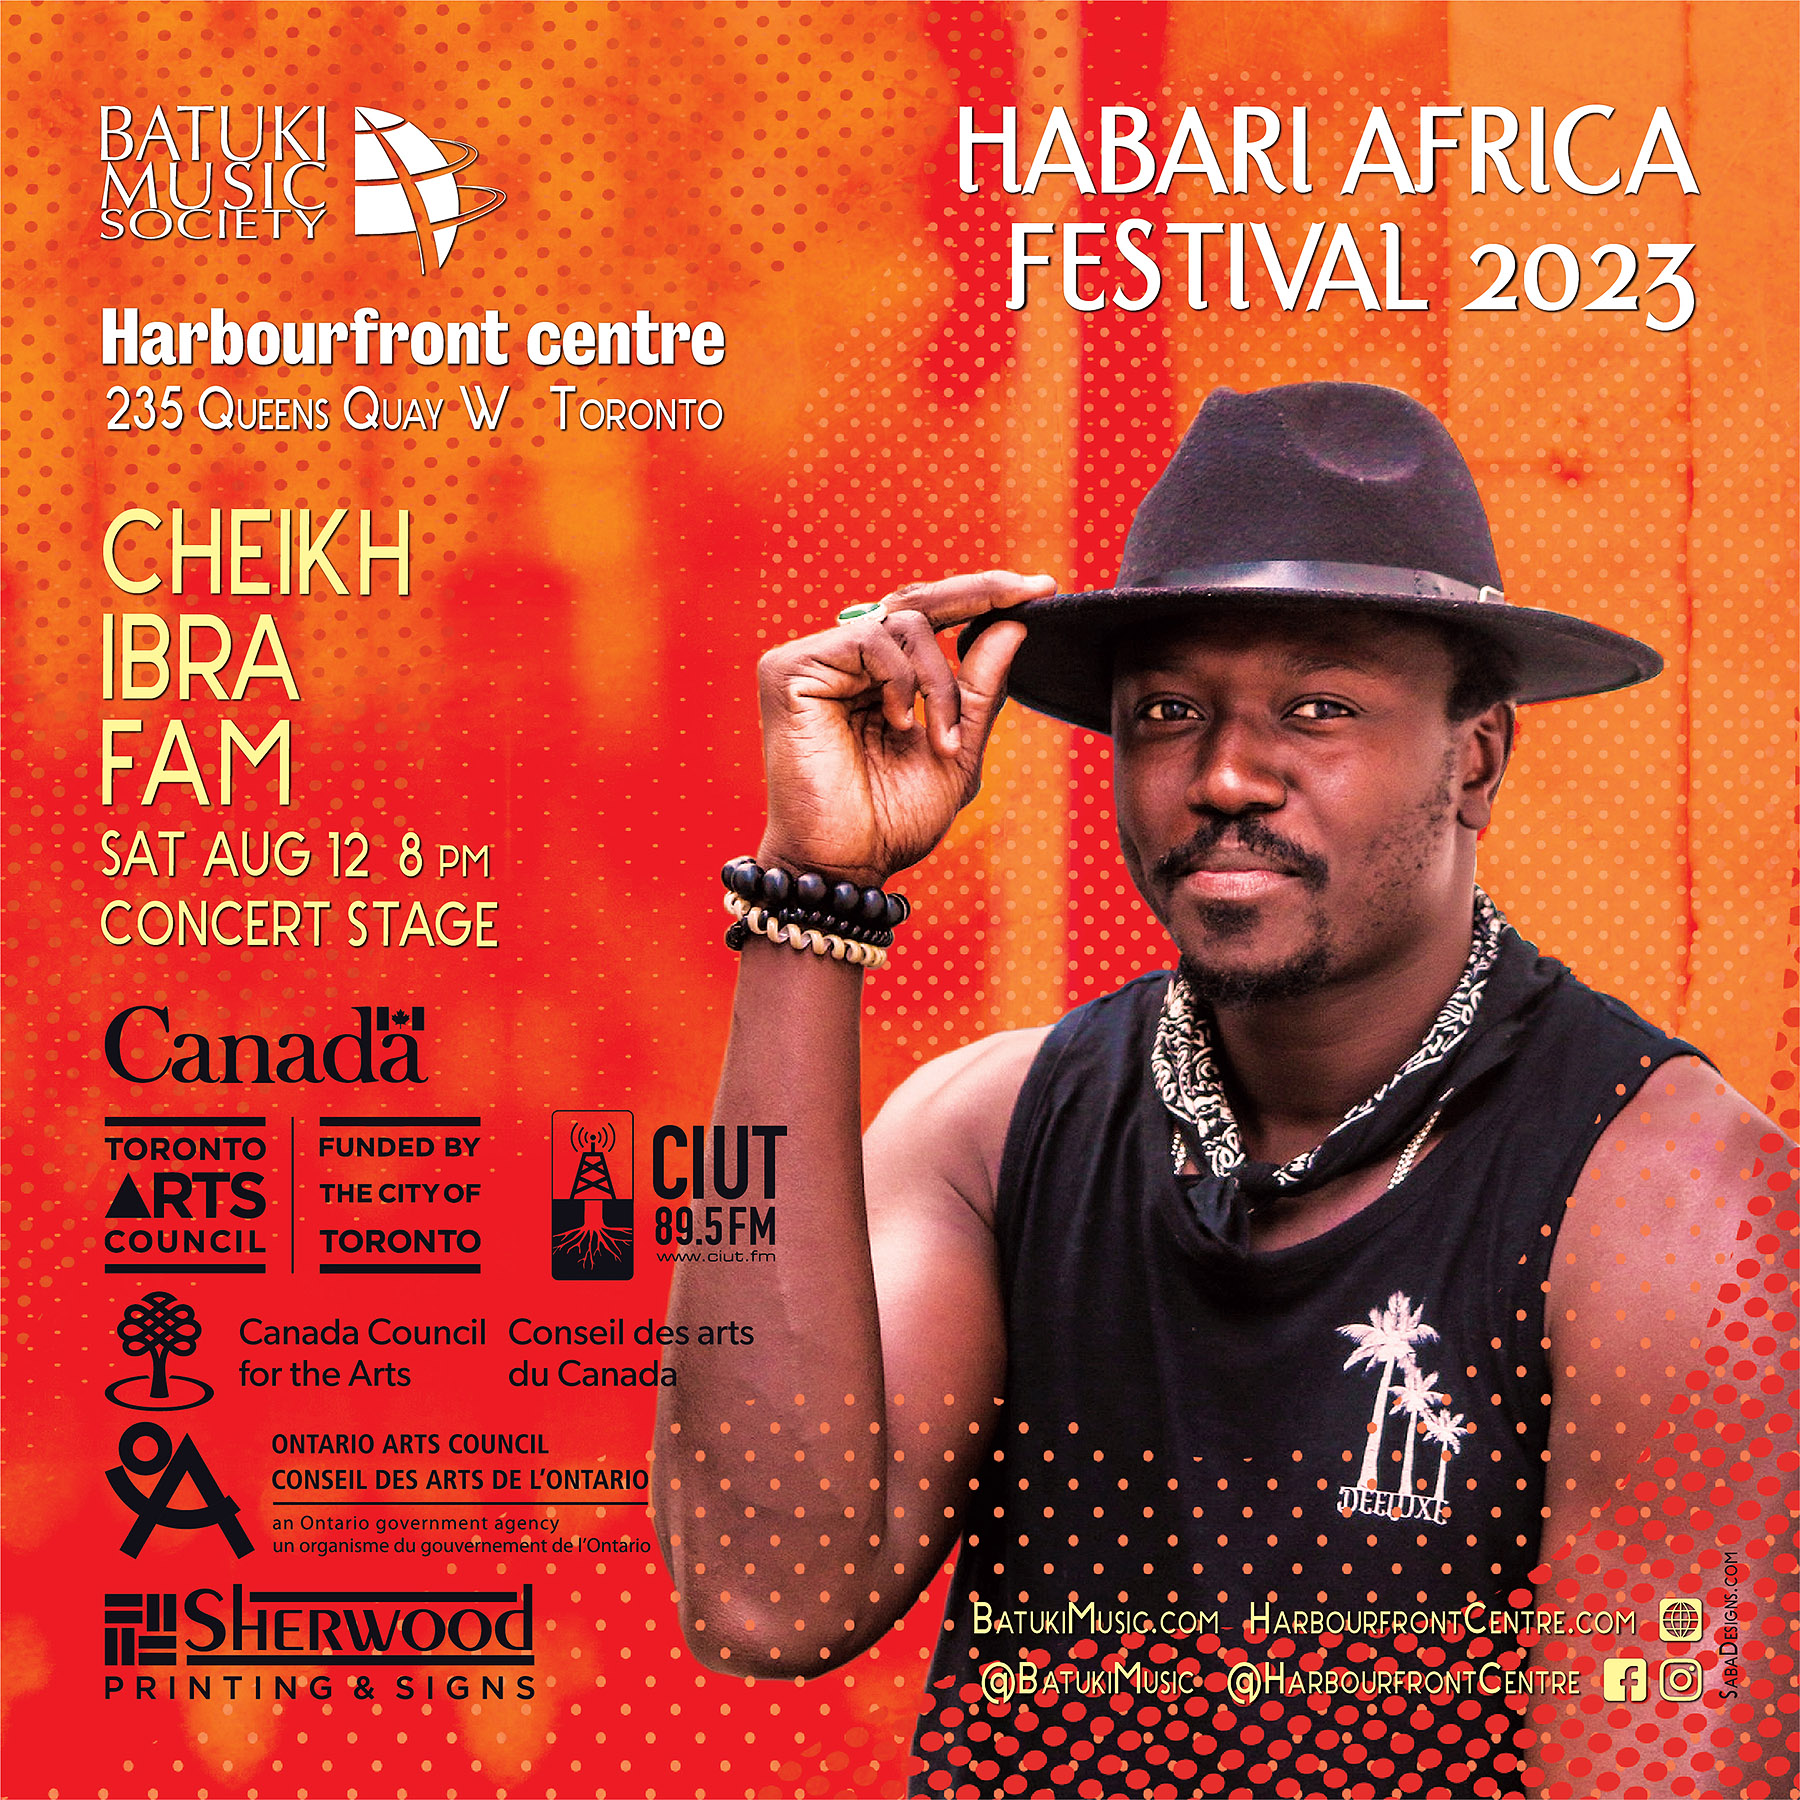 Habari Africa Live Festival 2023 by Batuki Music Society Cheikh Ibra Fam